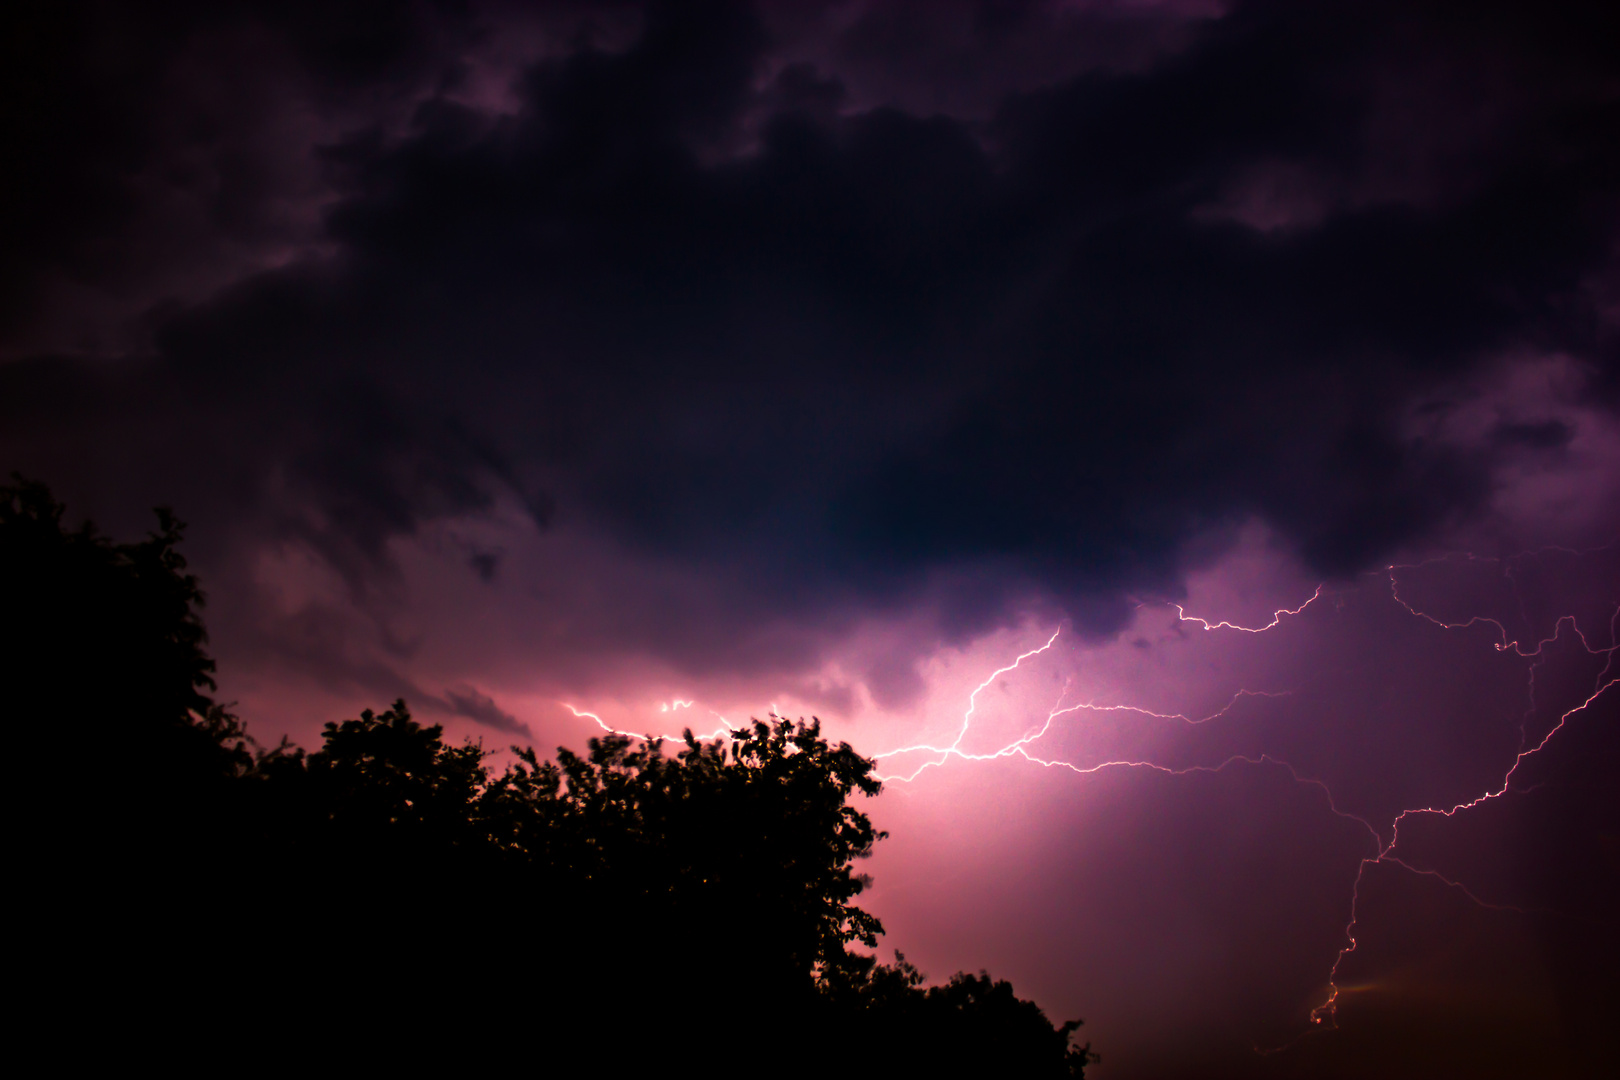 Thunderstorm, Rosendahl, Germany, 06-06-2014 IV